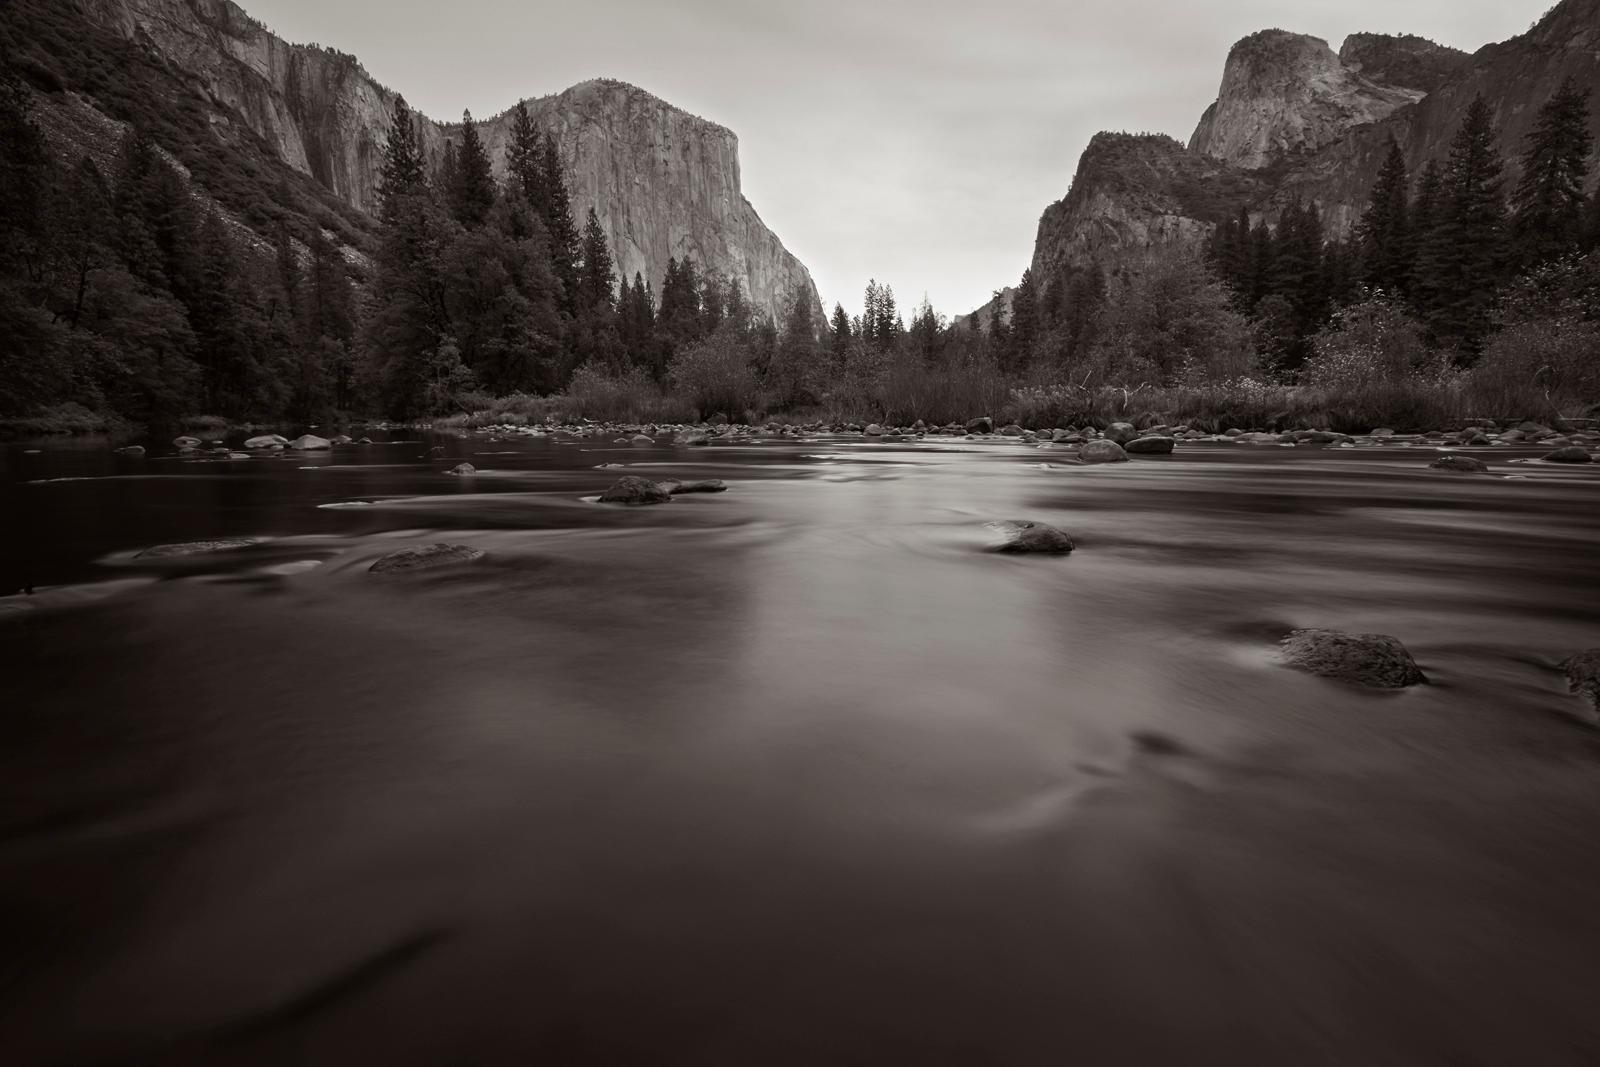 Drew Doggett Black and White Photograph - El Capitan in the Distance, Classic Black & White Photograph of Yosemite